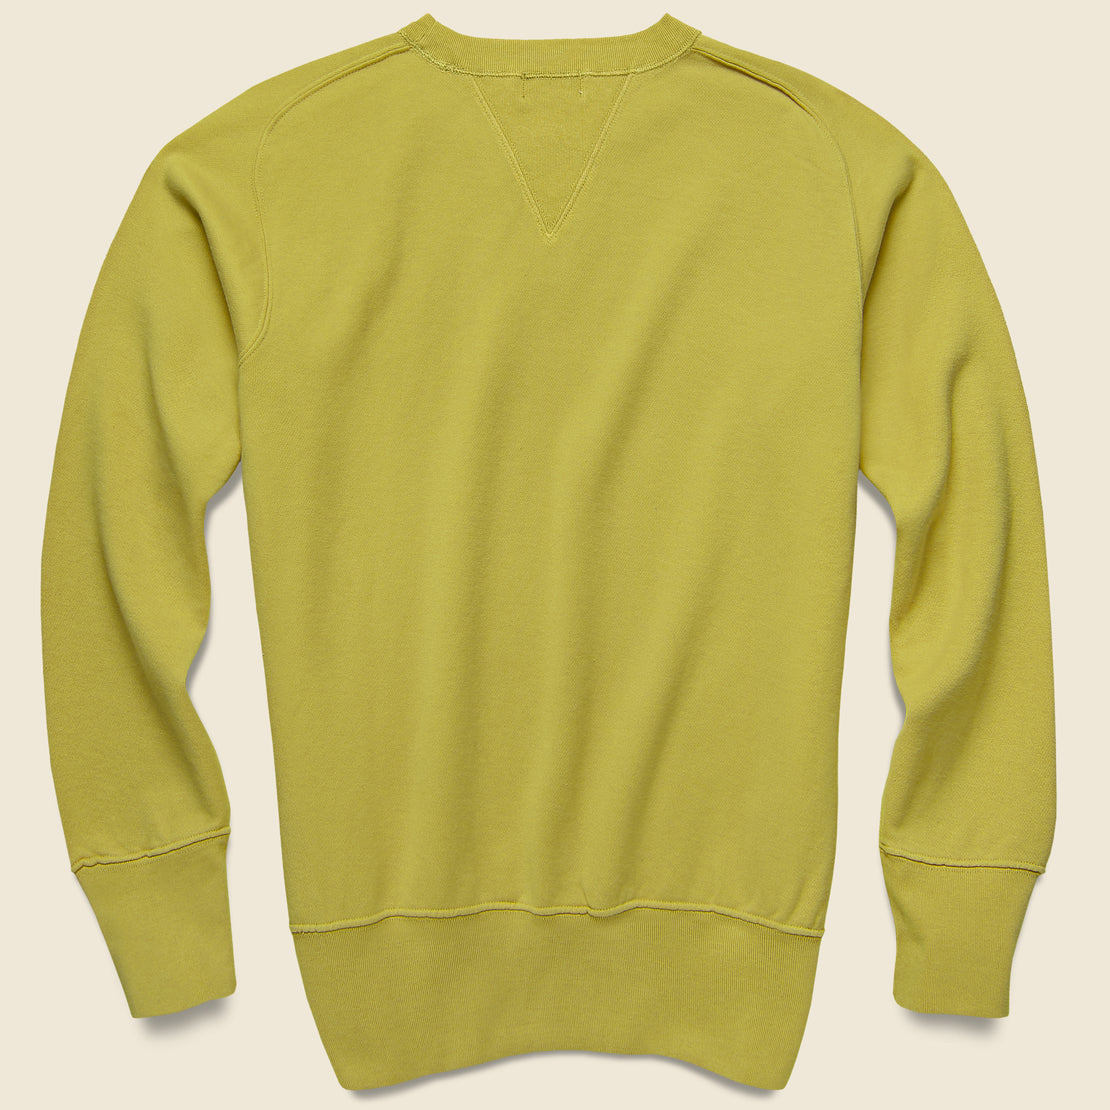 Bay Meadows Sweatshirt - Ecru Olive - Levis Vintage Clothing - STAG Provisions - Tops - Fleece / Sweatshirt